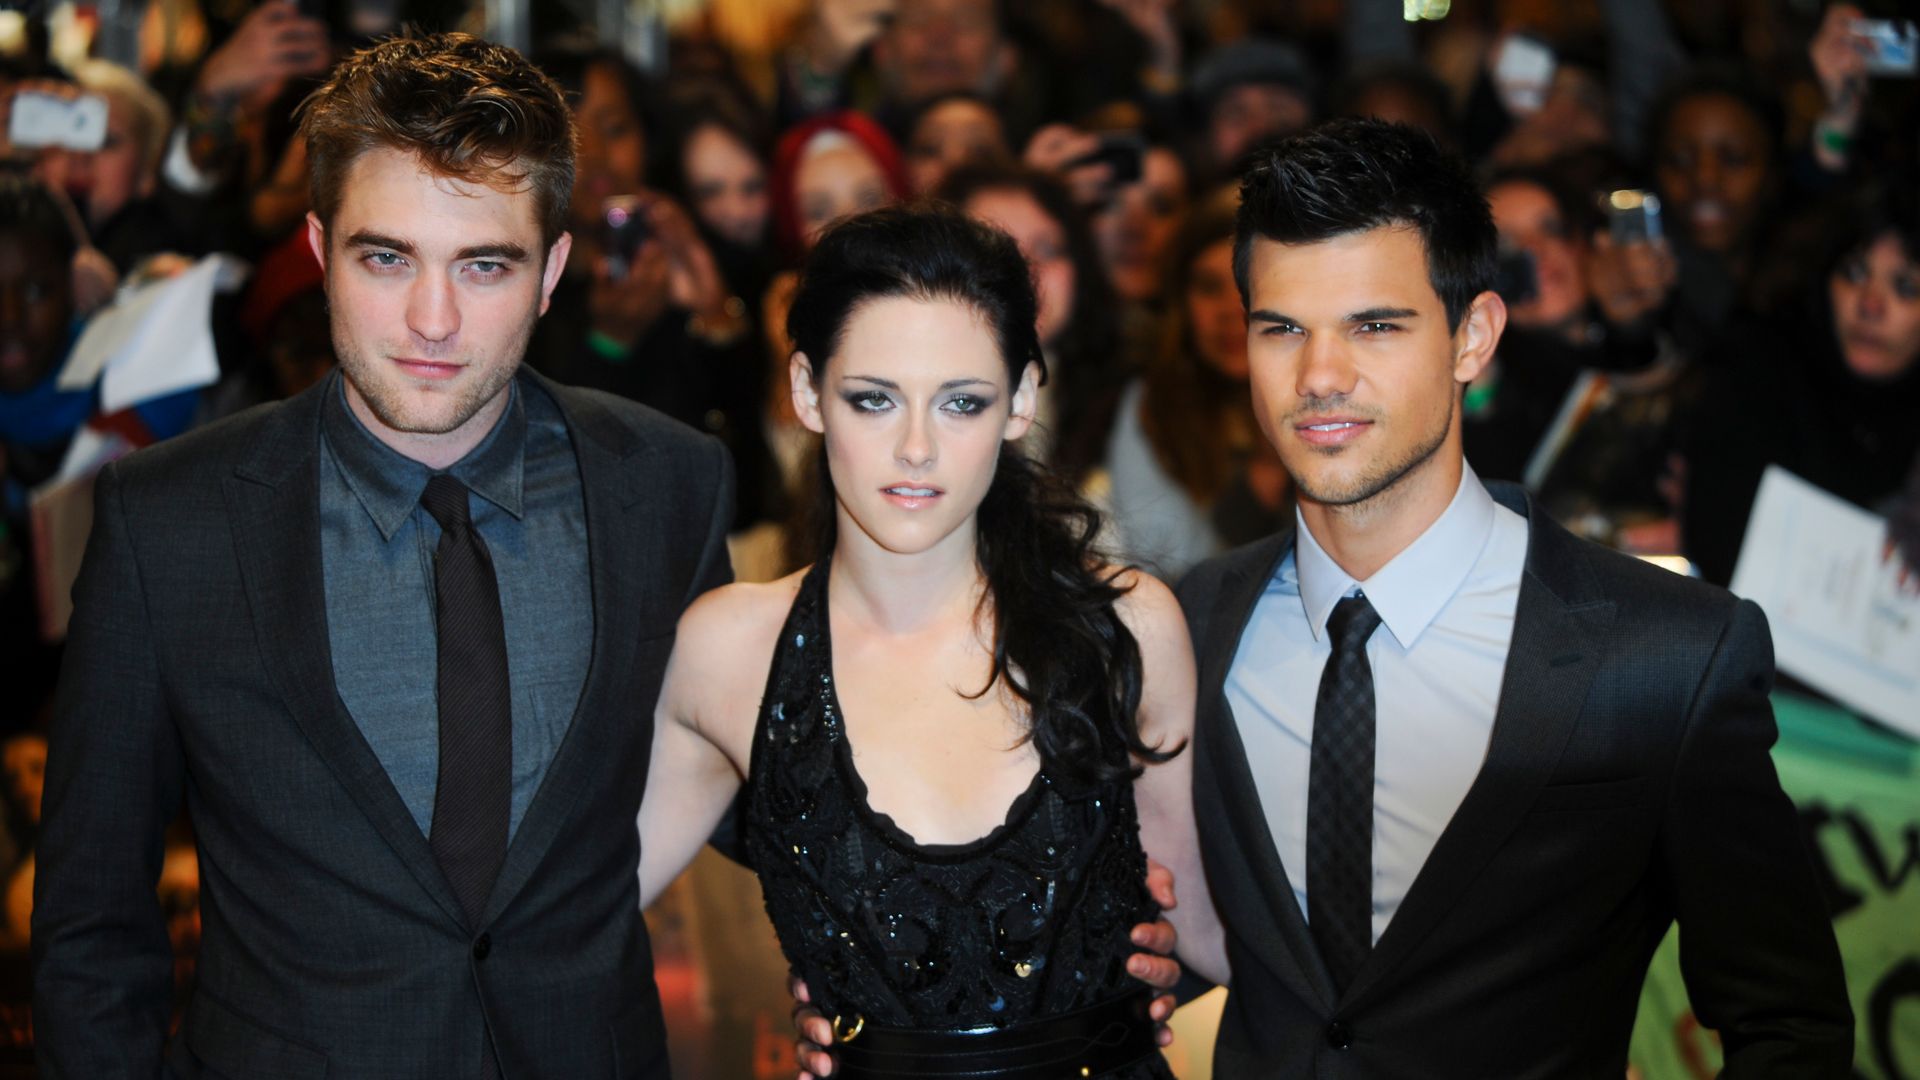 Robert Pattinson, Kristen Stewart and Taylor Lautner attend the UK premiere of The Twilight Saga: Breaking Dawn Part 1 in 2011